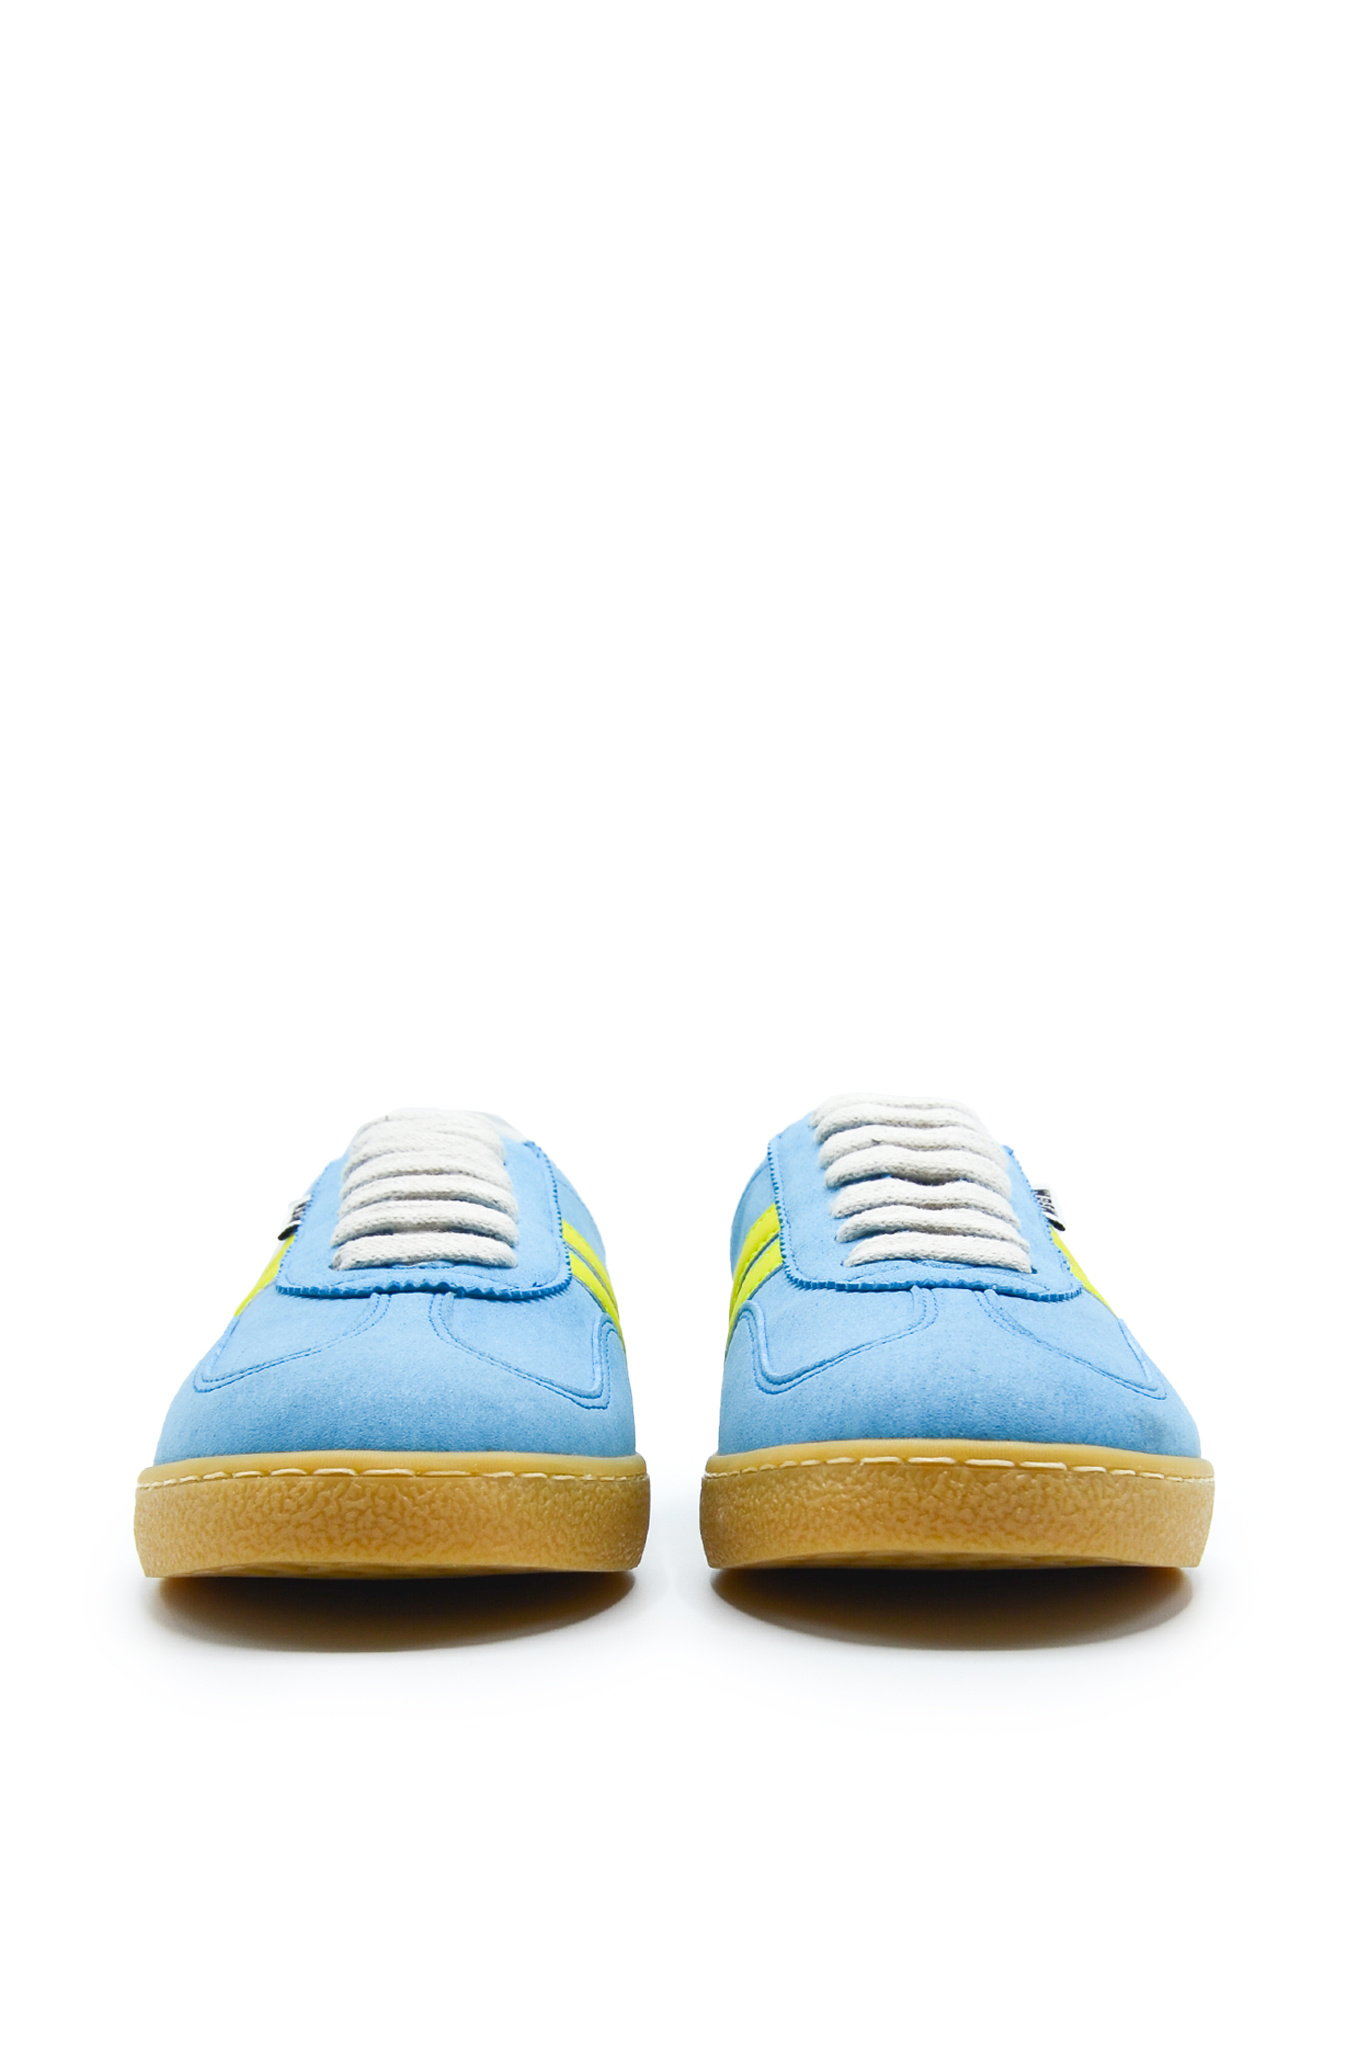 Retro Sneakers in Light Blue-9